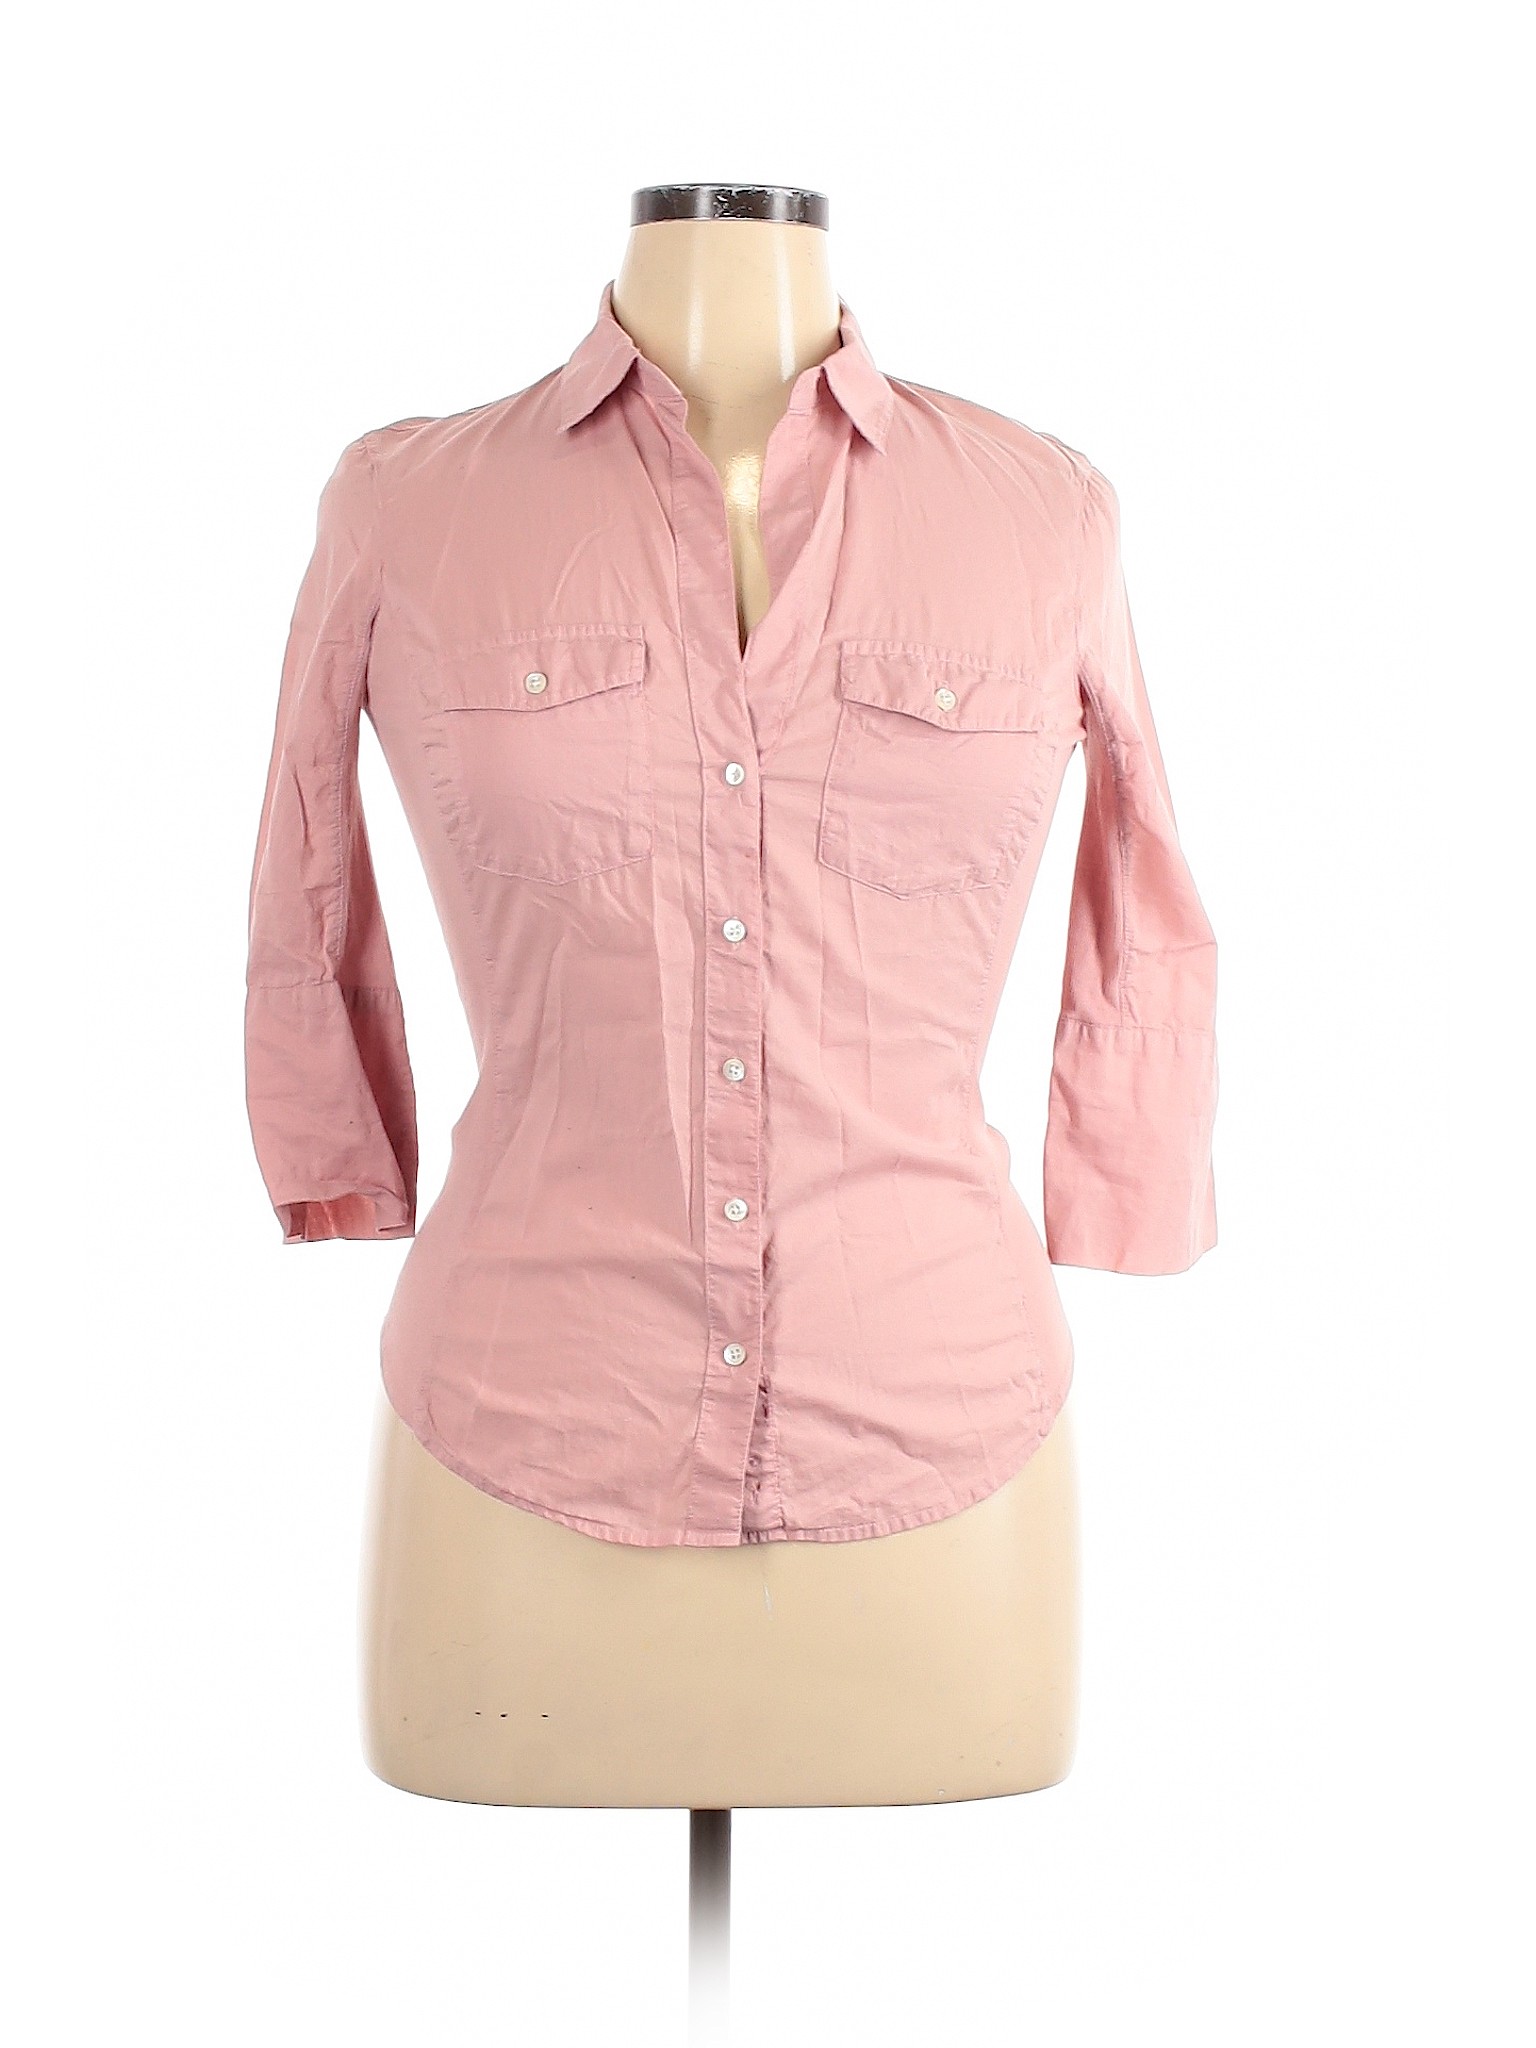 James Perse Women Pink 3/4 Sleeve Button-Down Shirt L | eBay